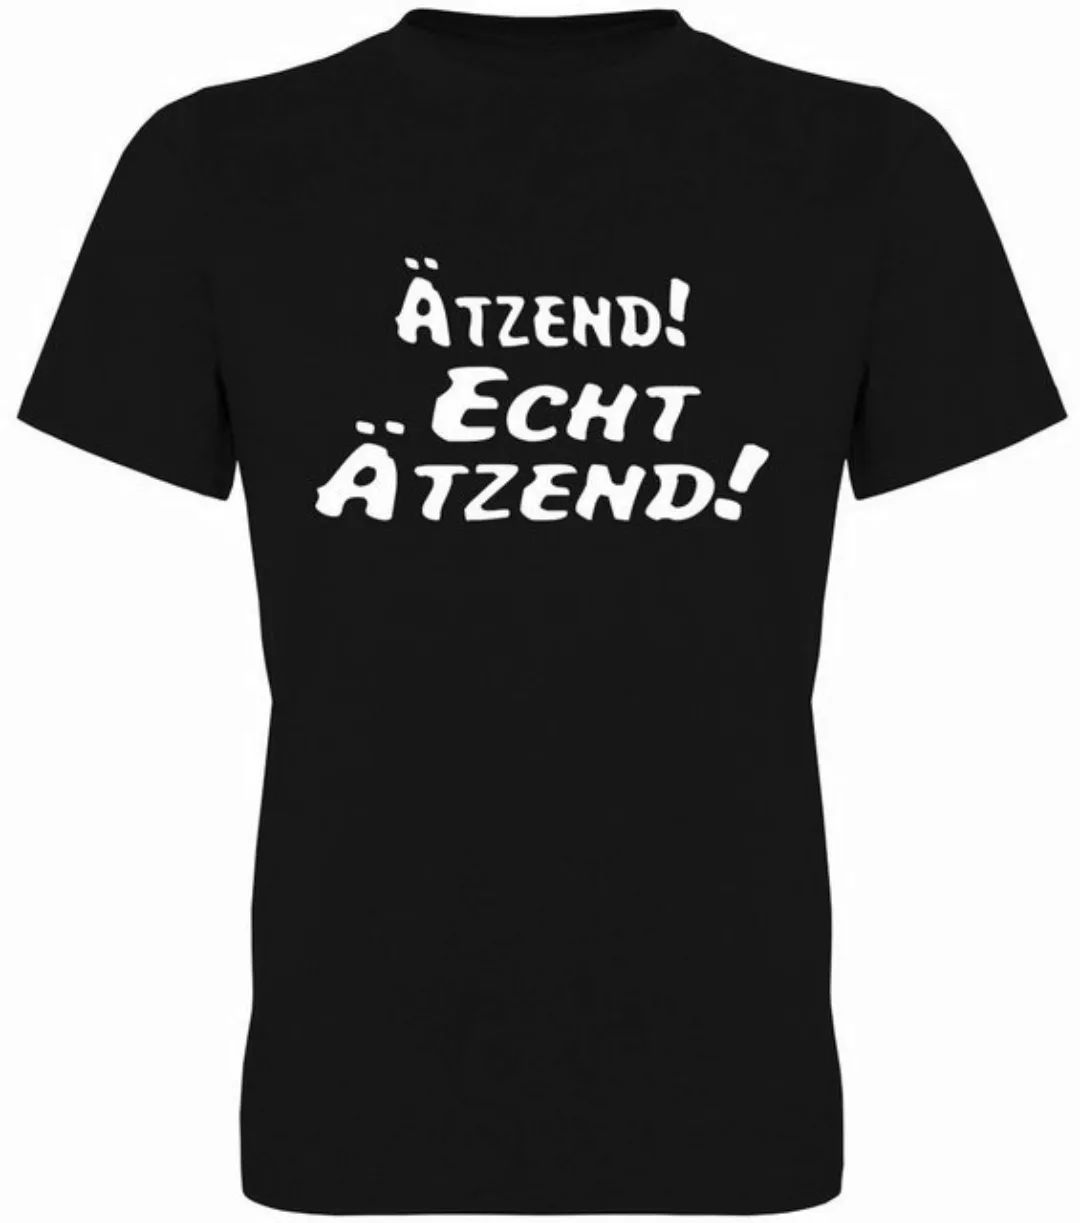 G-graphics T-Shirt Ätzend! Echt ätzend! Herren T-Shirt, mit trendigem Front günstig online kaufen